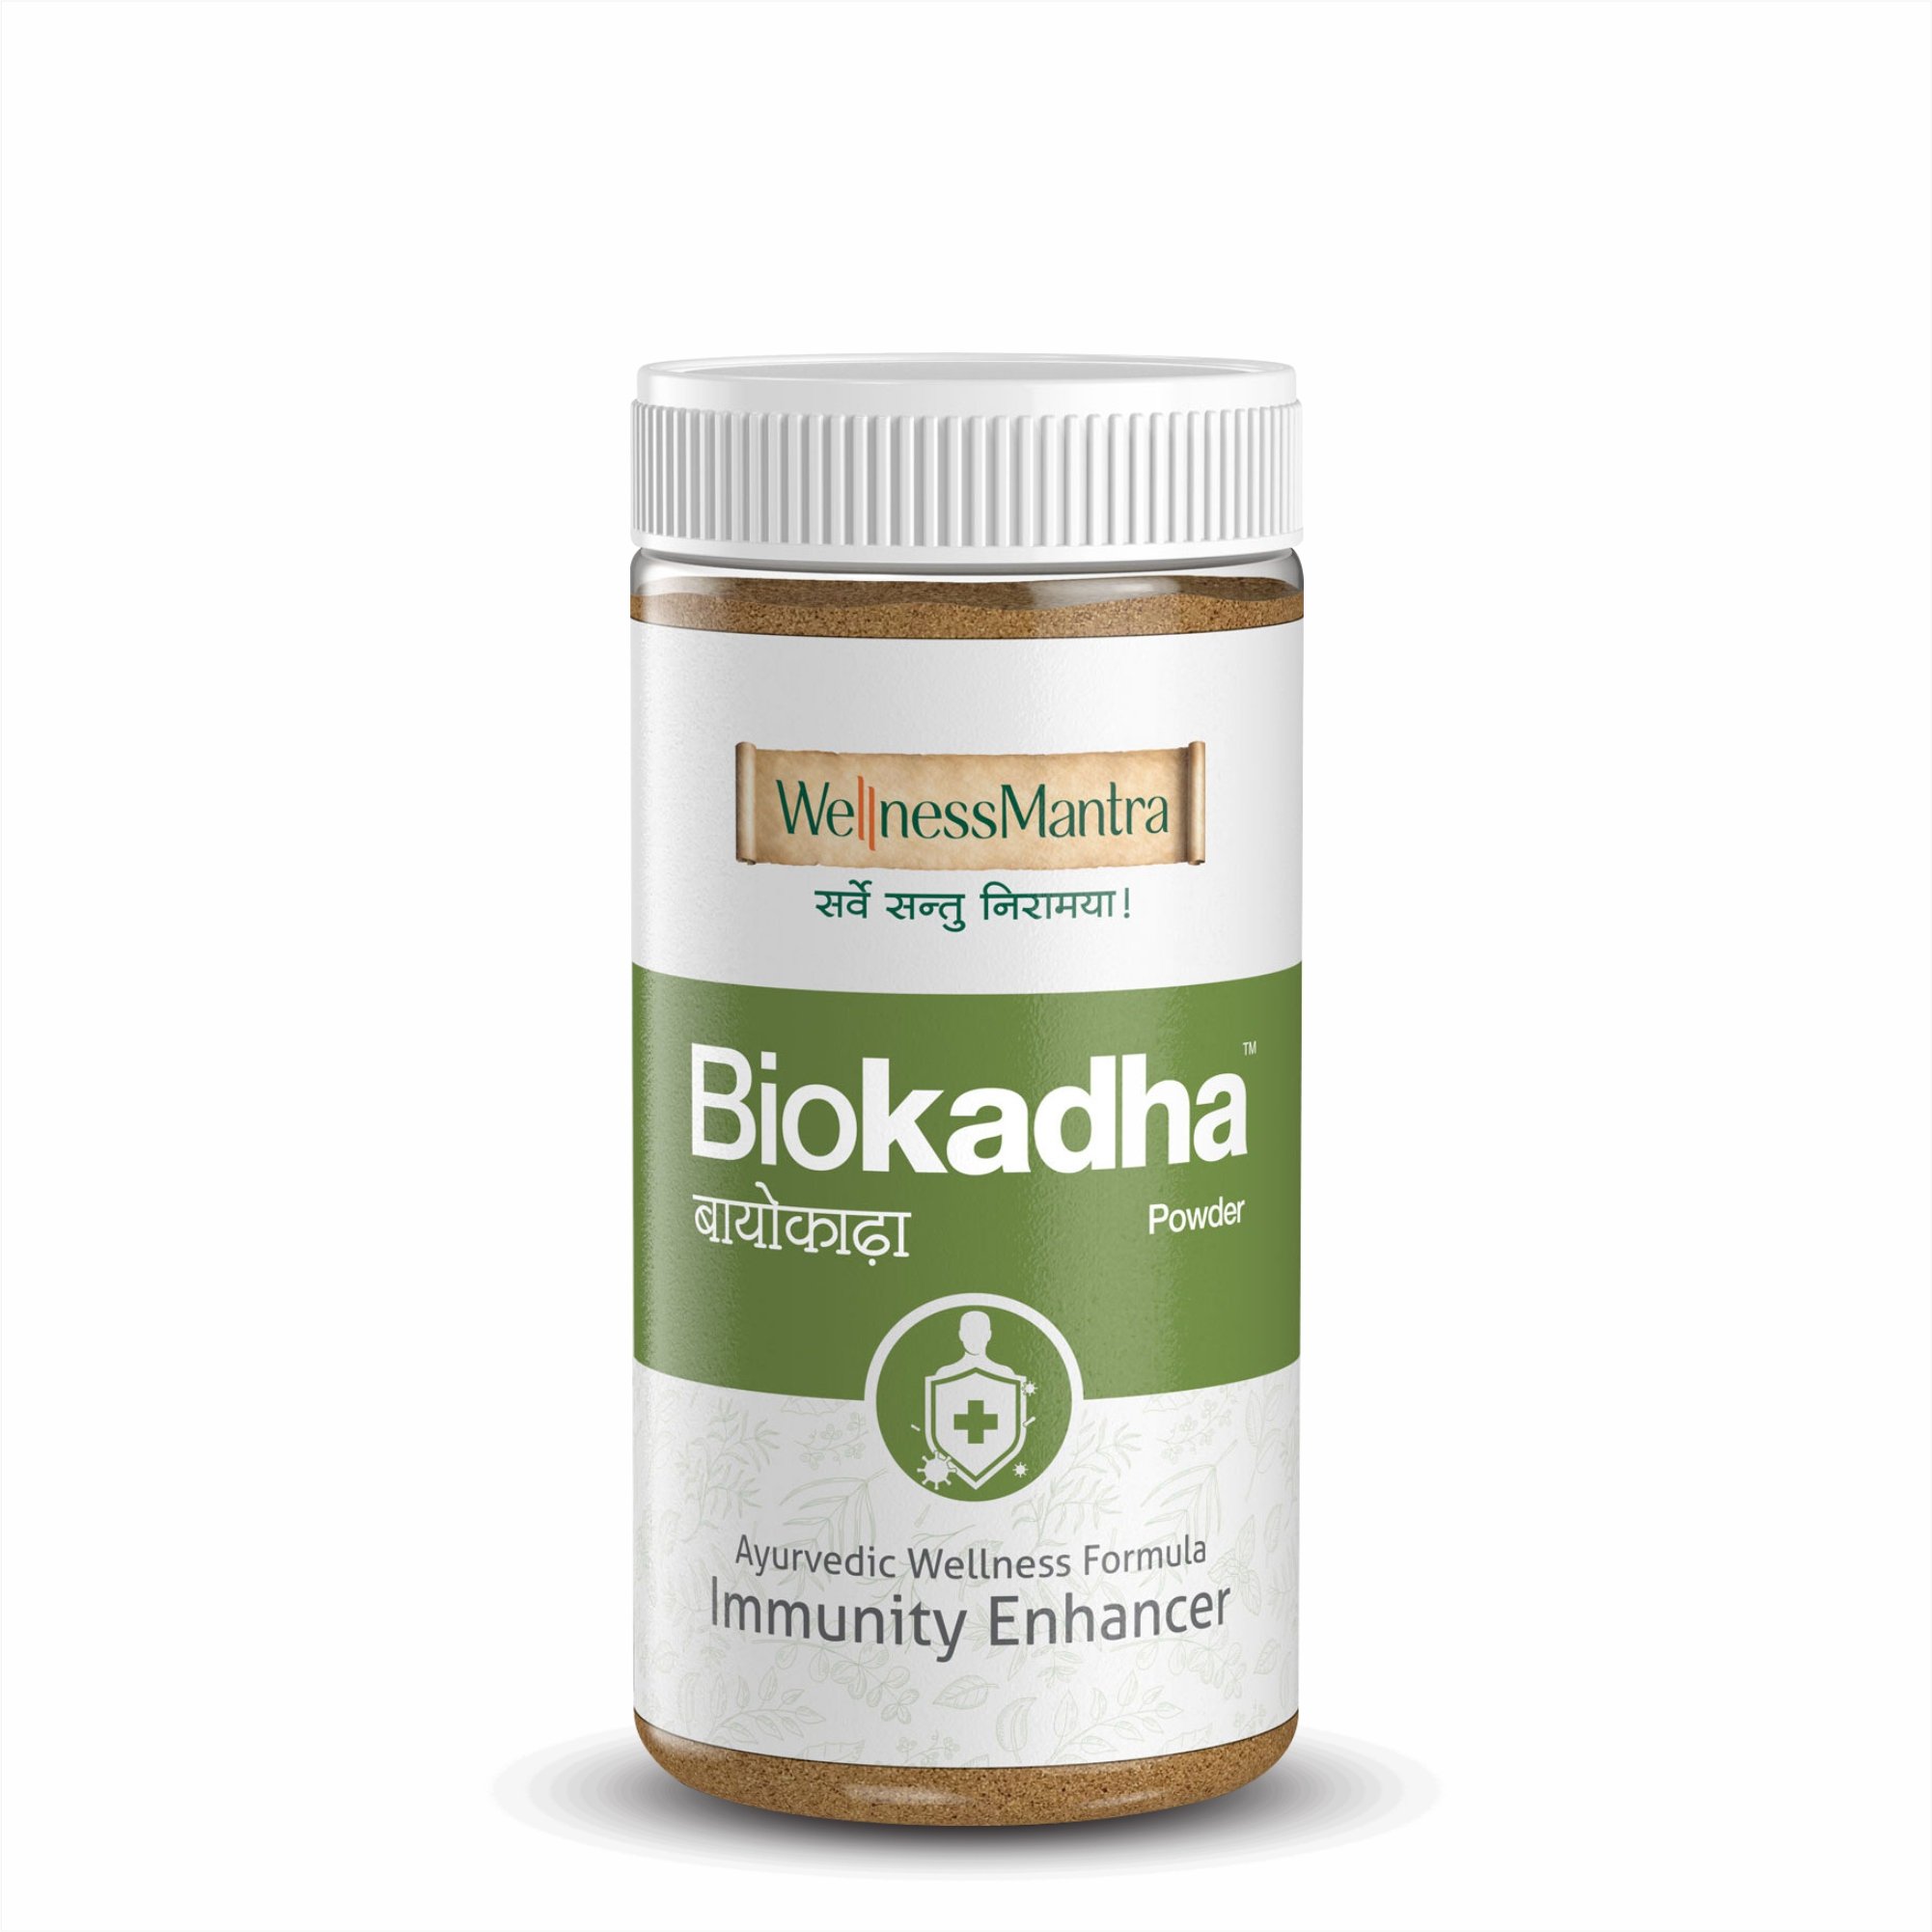 Buy Wellness Mantra Biokadha Powder at Best Price Online